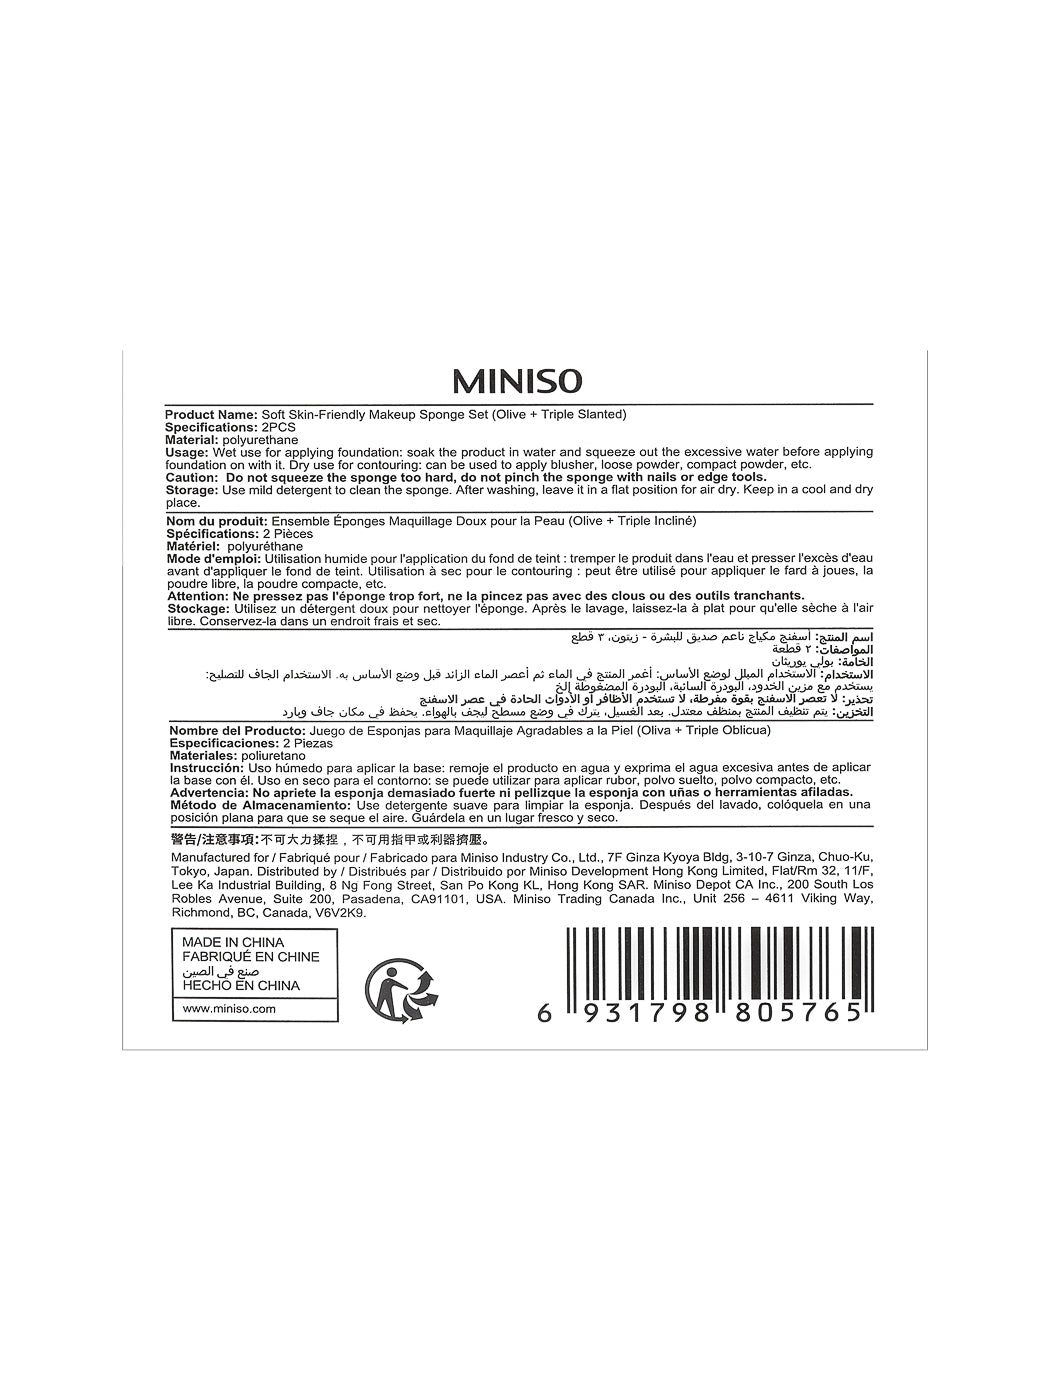 MINISO SOFT SKIN-FRIENDLY MAKEUP SPONGE SET ( OLIVE + TRIPLE SLANTED ) 2010435210101 MAKEUP TOOLS